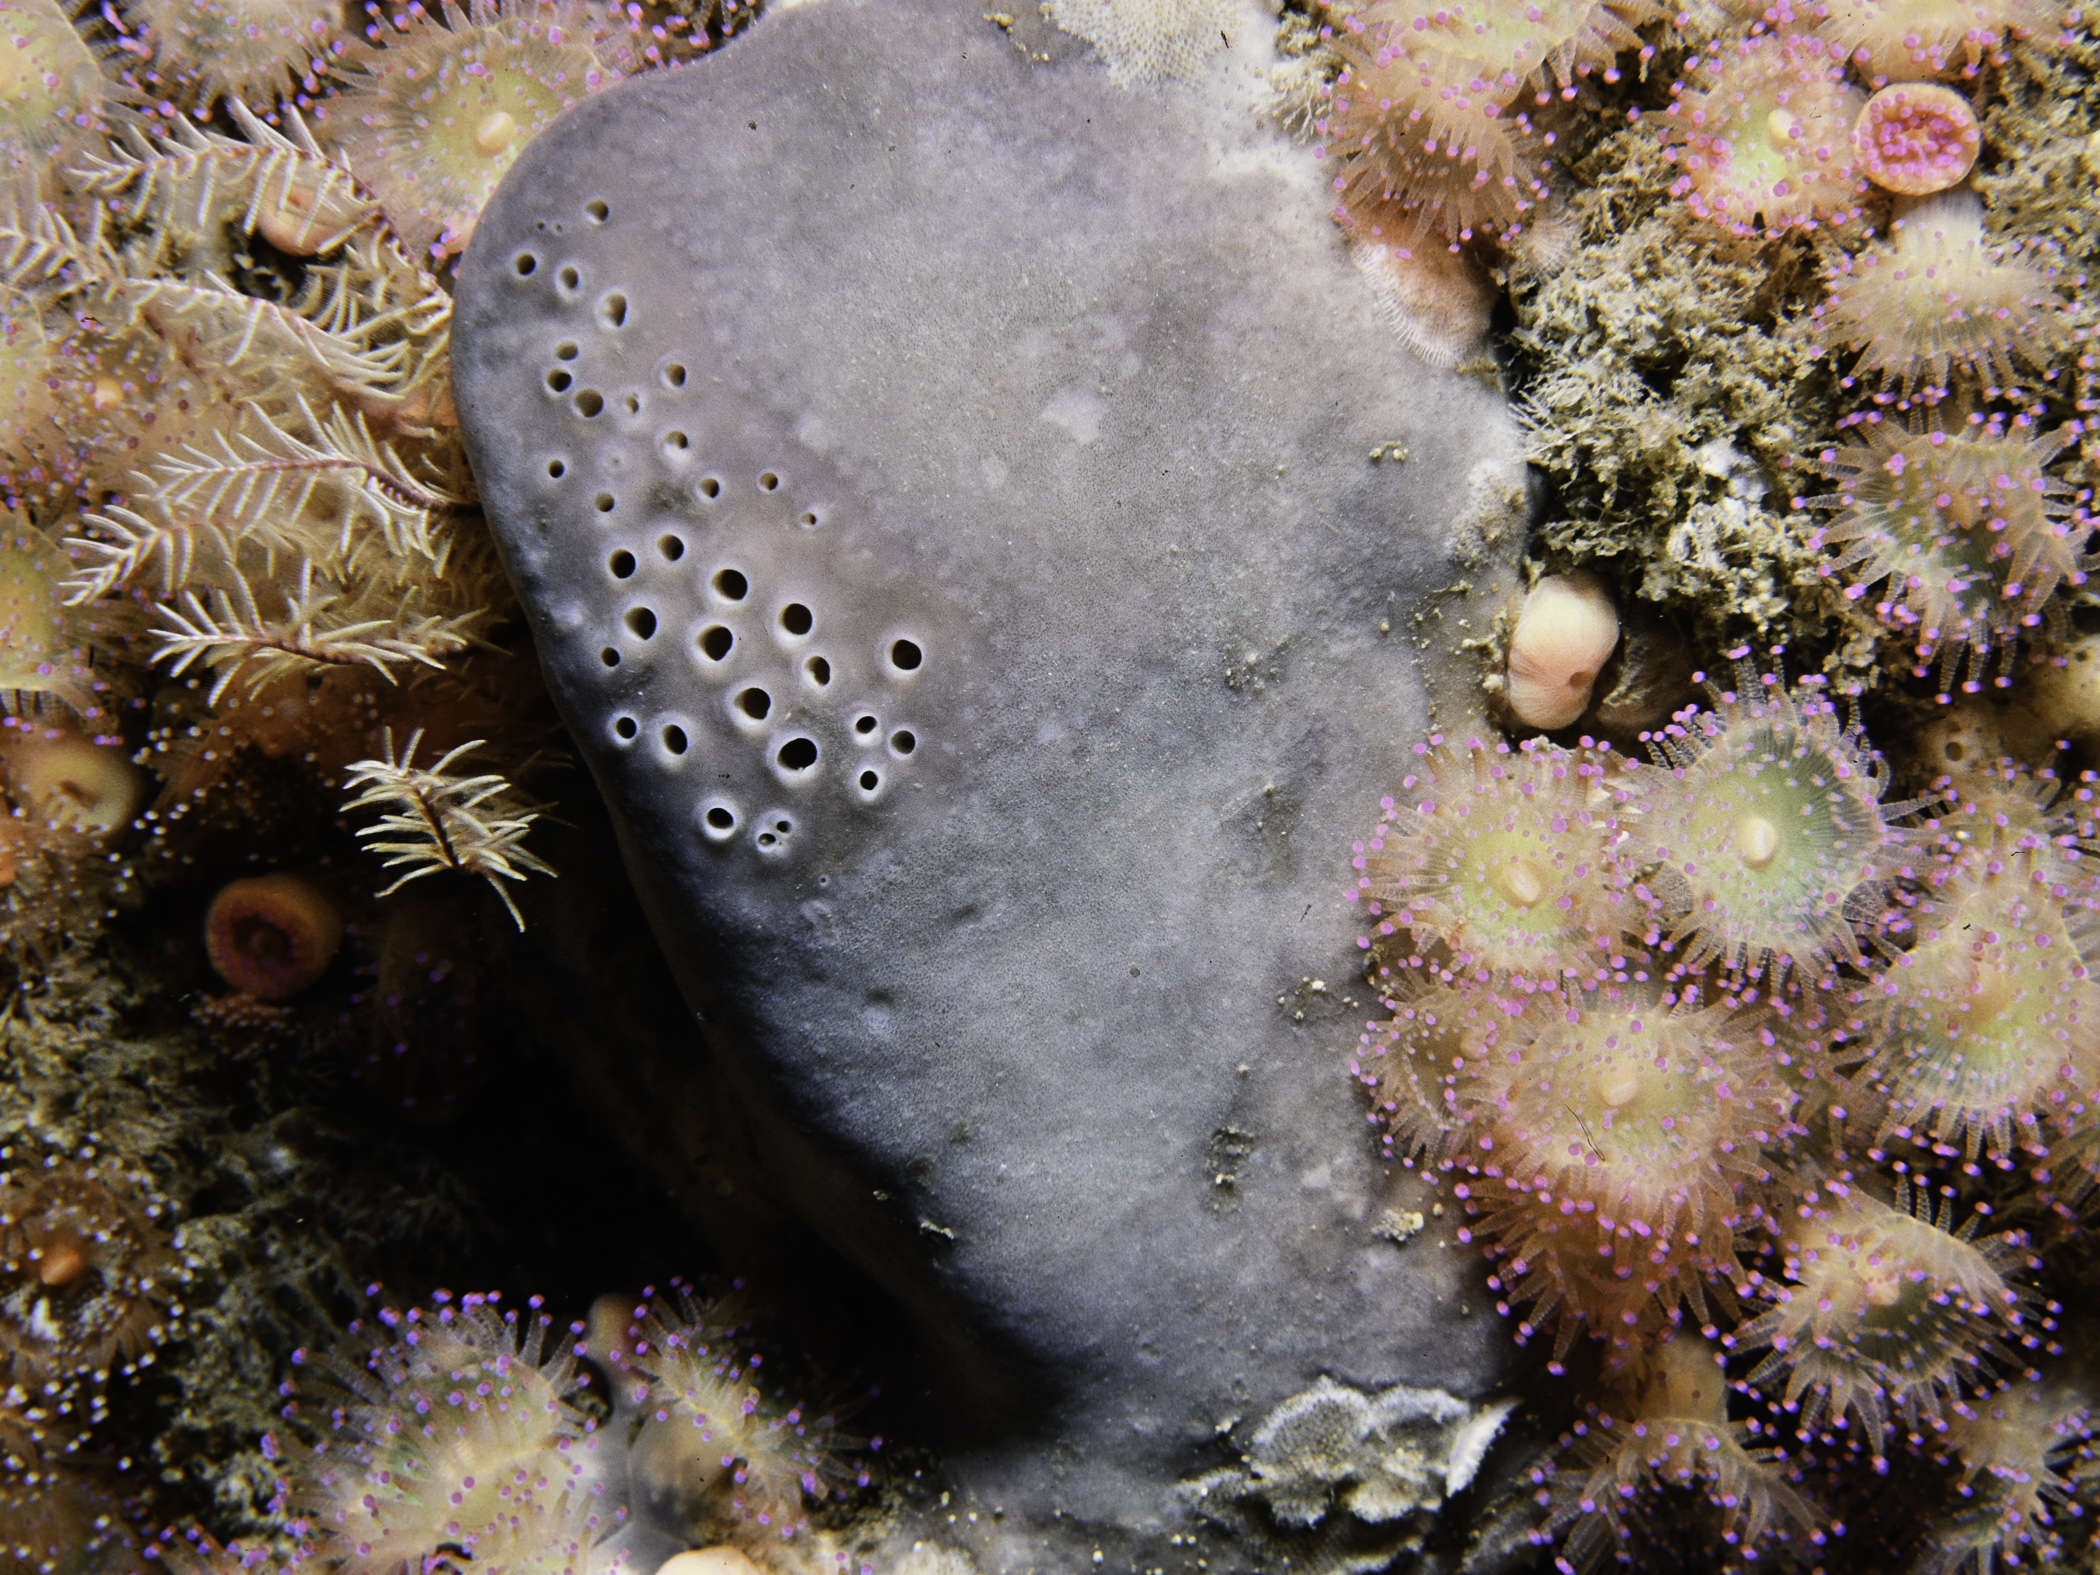 image: Pachymatisma johnstonia. Portnagh Rock, St. John's Point, Co Donegal.